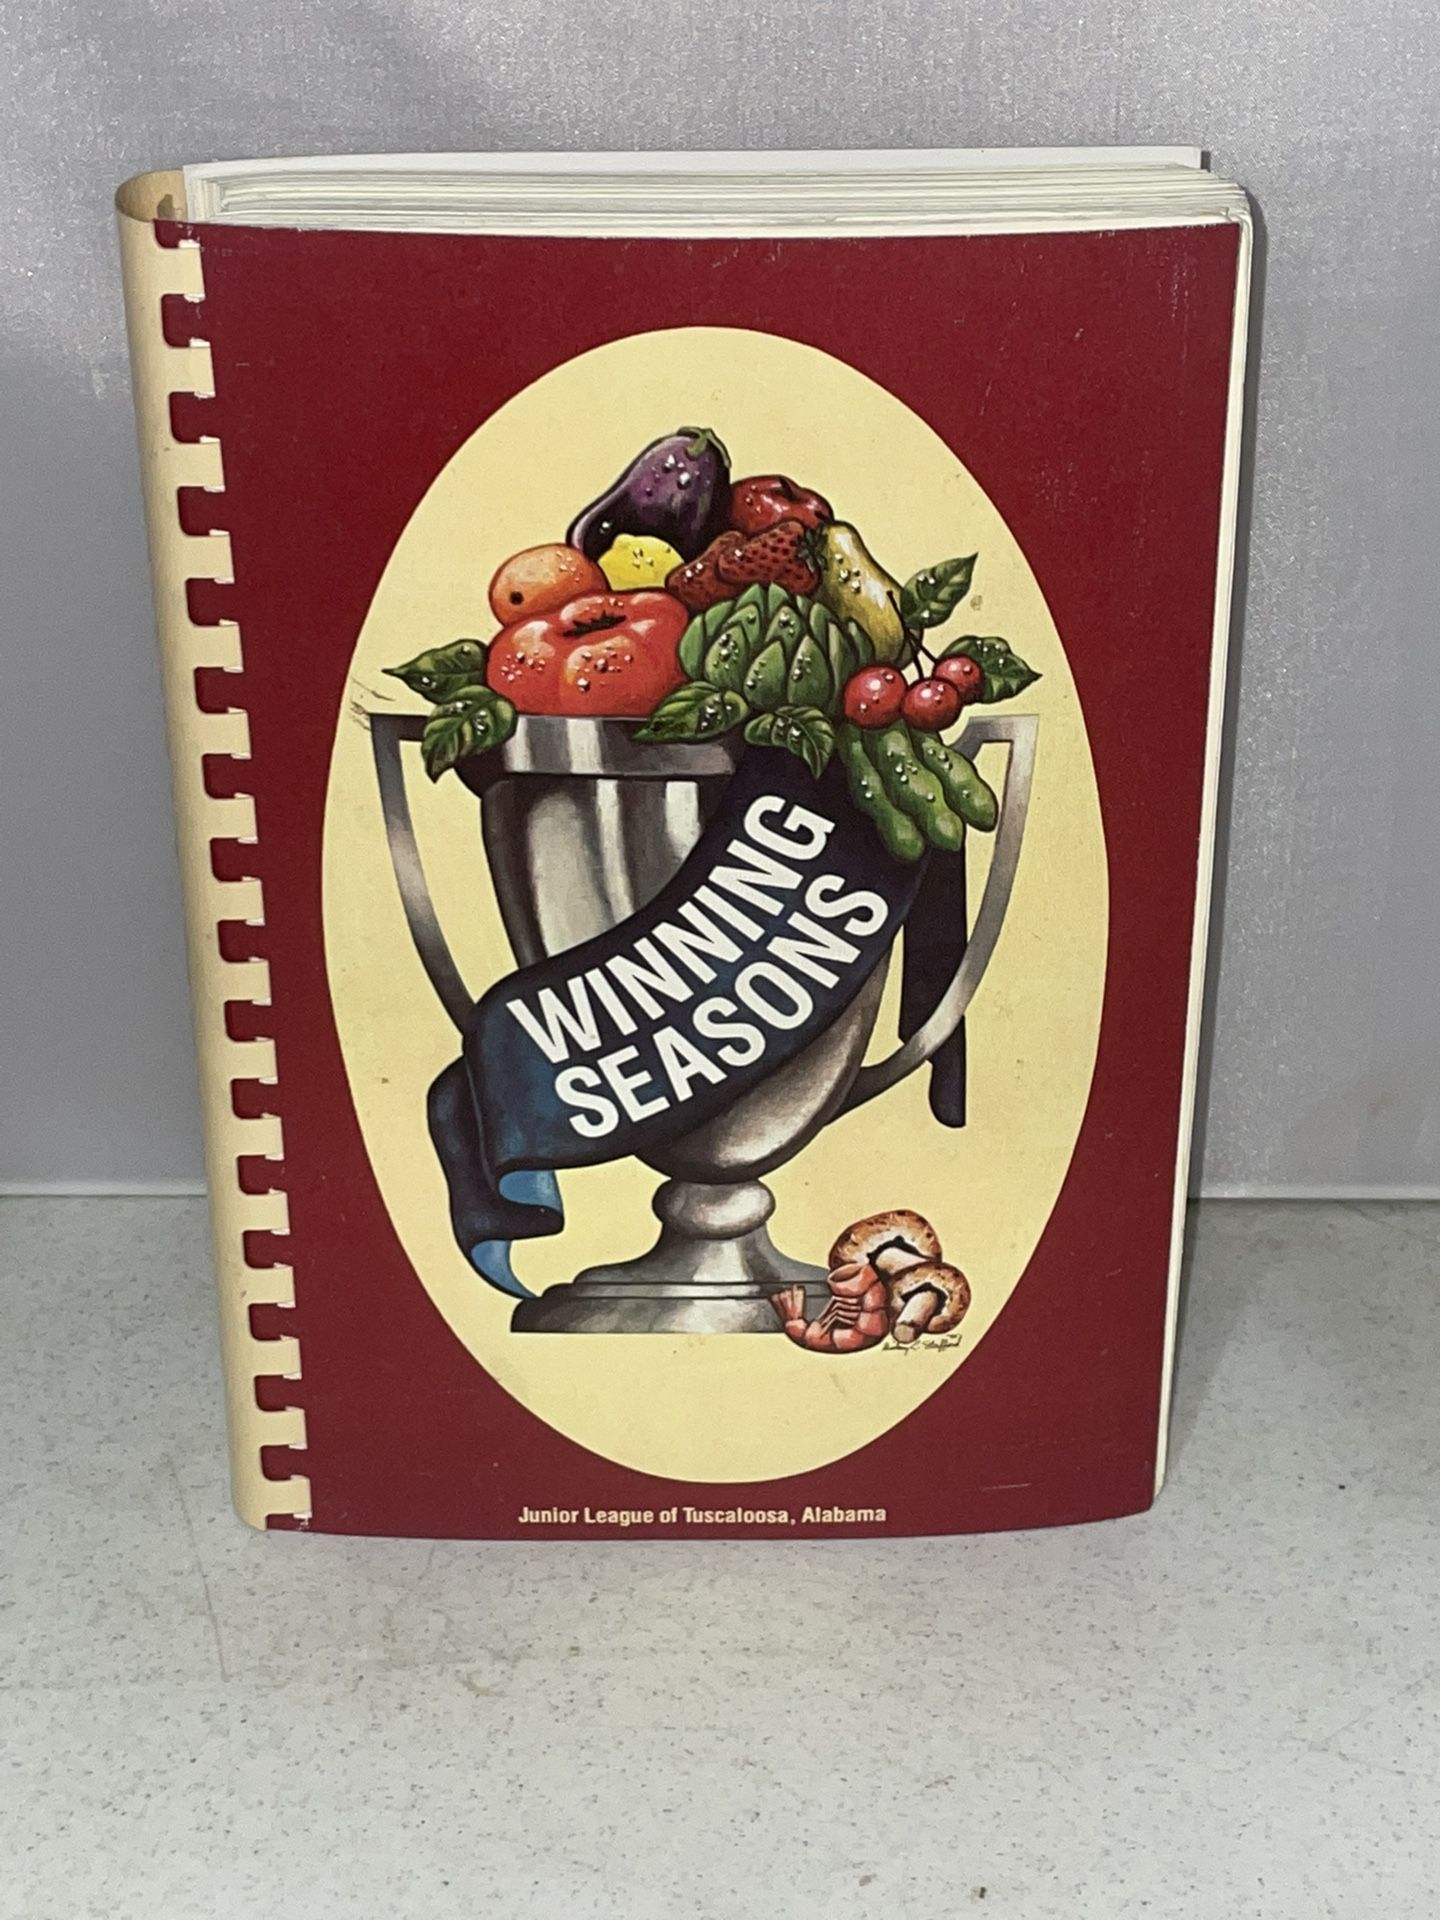 Winning Seasons Cookbook - Junior League of Tuscaloosa, Alabama - 1979